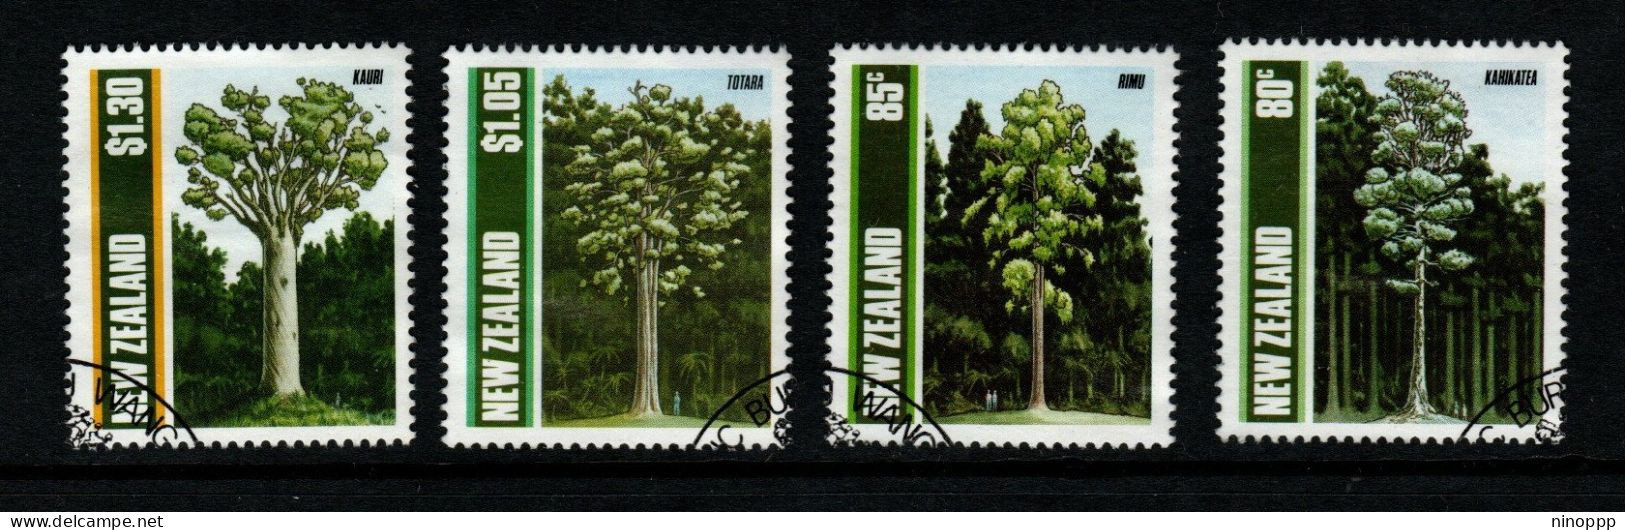 New Zealand SG 1511-14  1989 Trees,used - Oblitérés